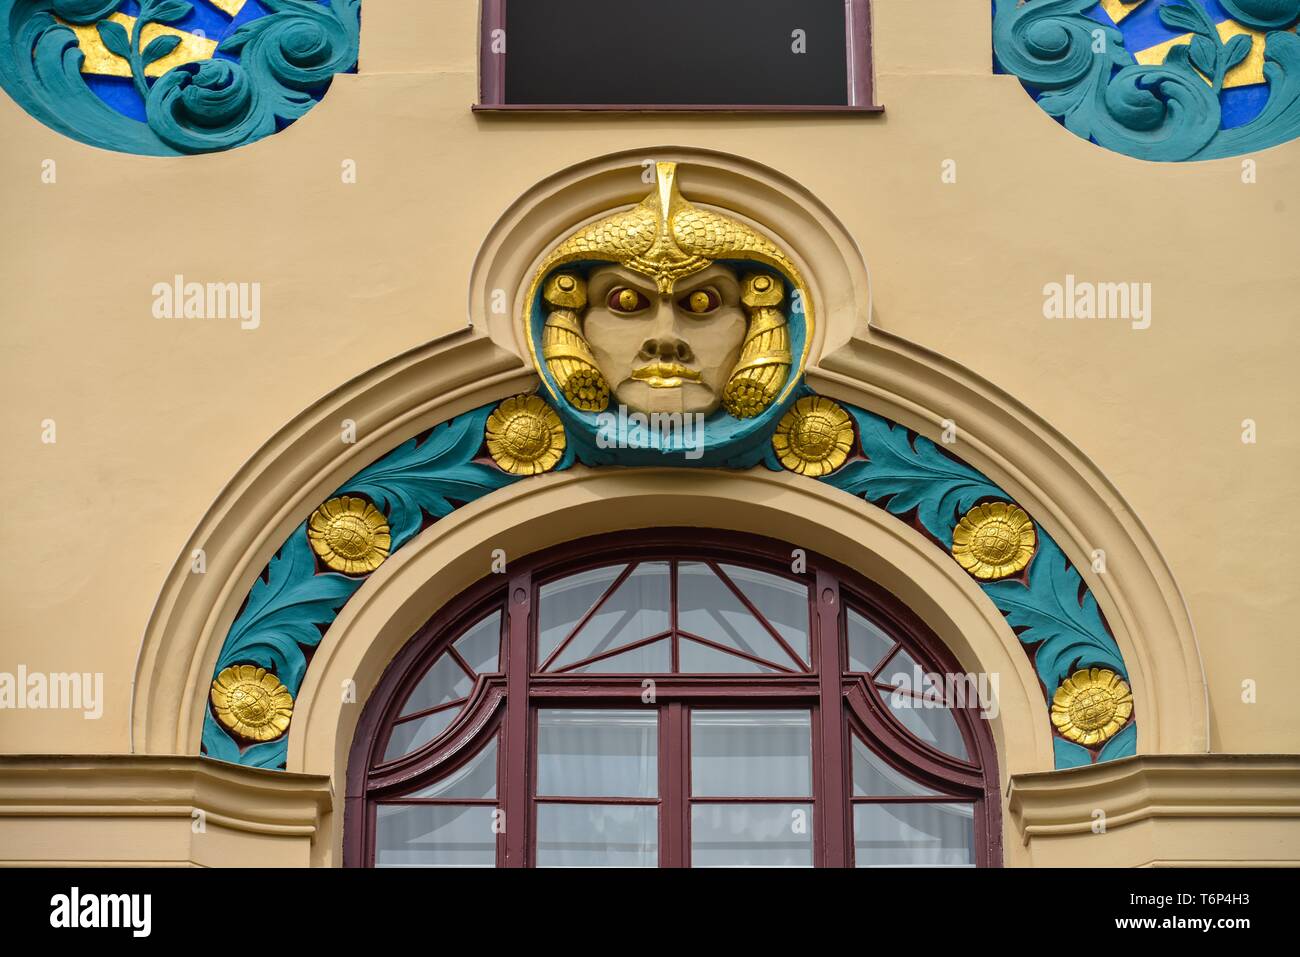 Art Nouveau facade, old building, residential building, Schwabing, Munich, Bavaria, Germany Stock Photo